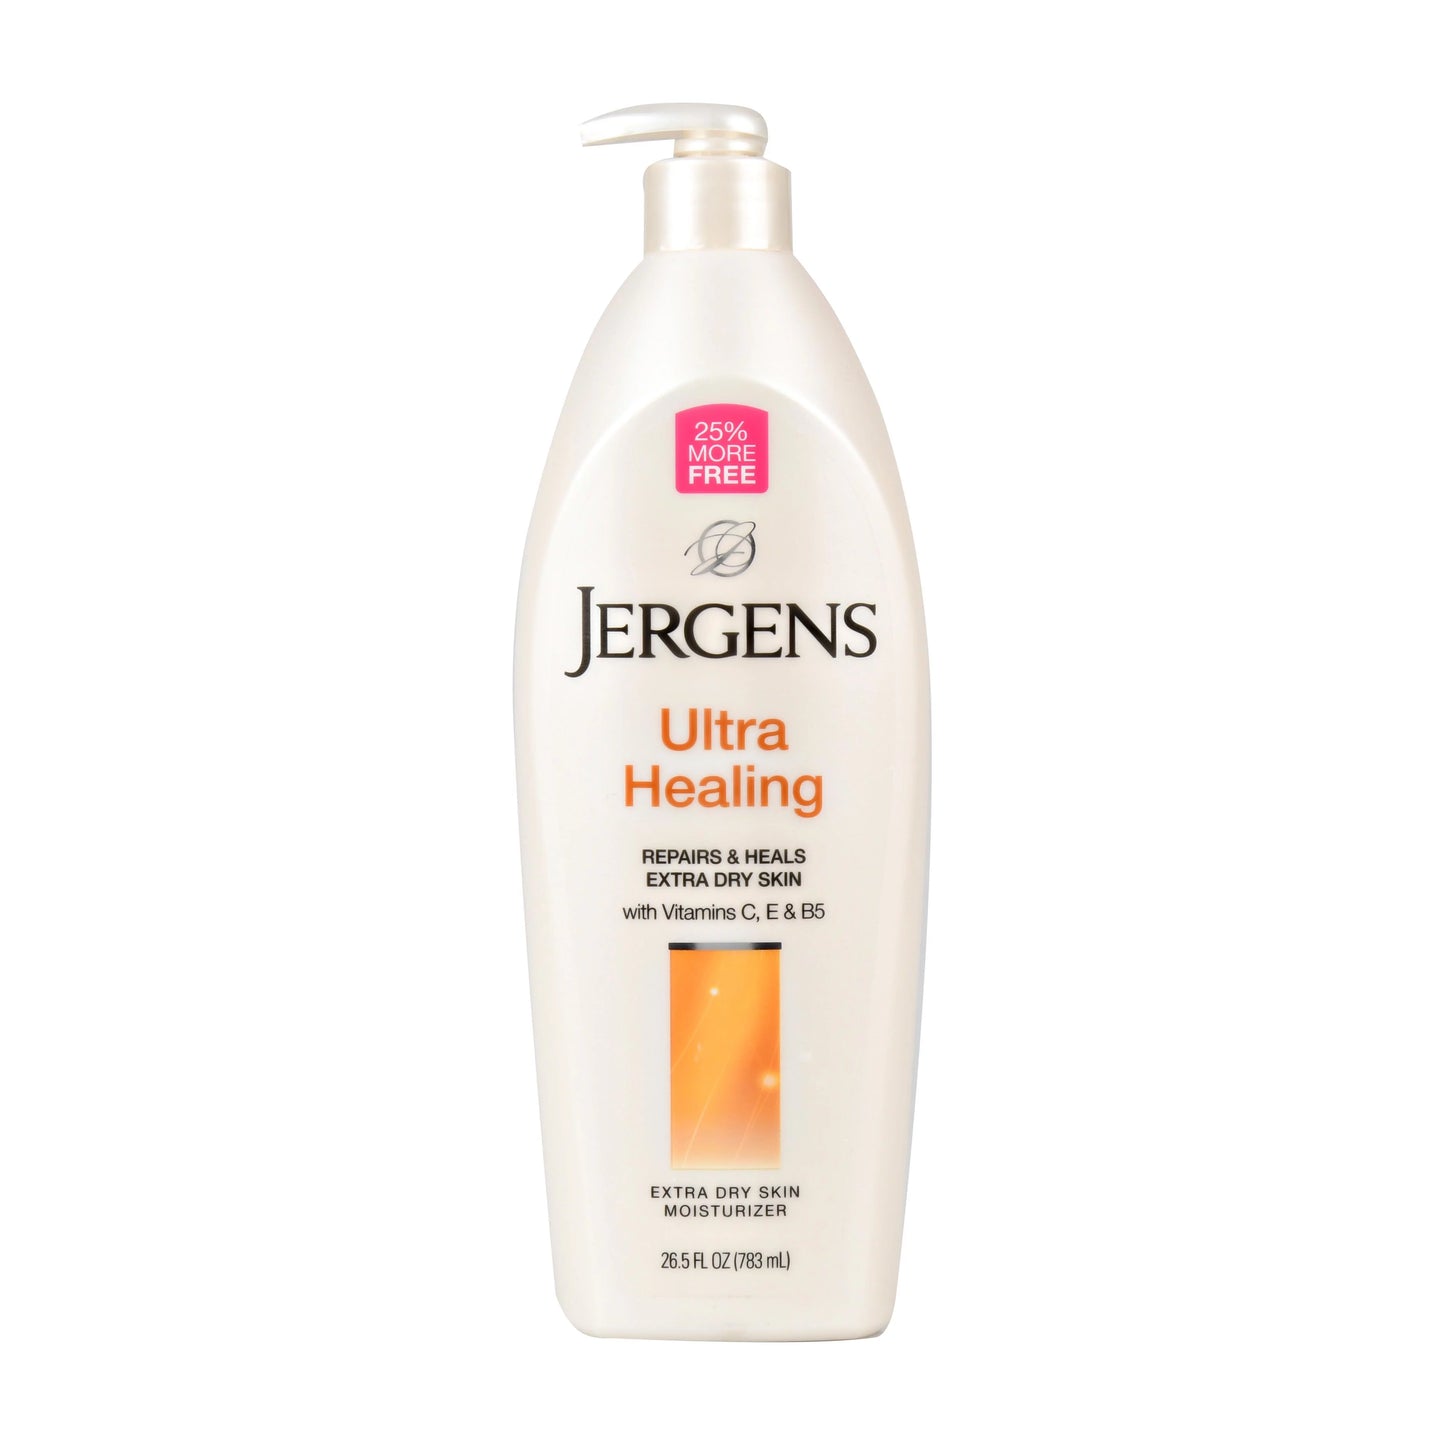 Jergens Ultra Healing For Extra Dry Skin Moisturizer - 26.5Oz